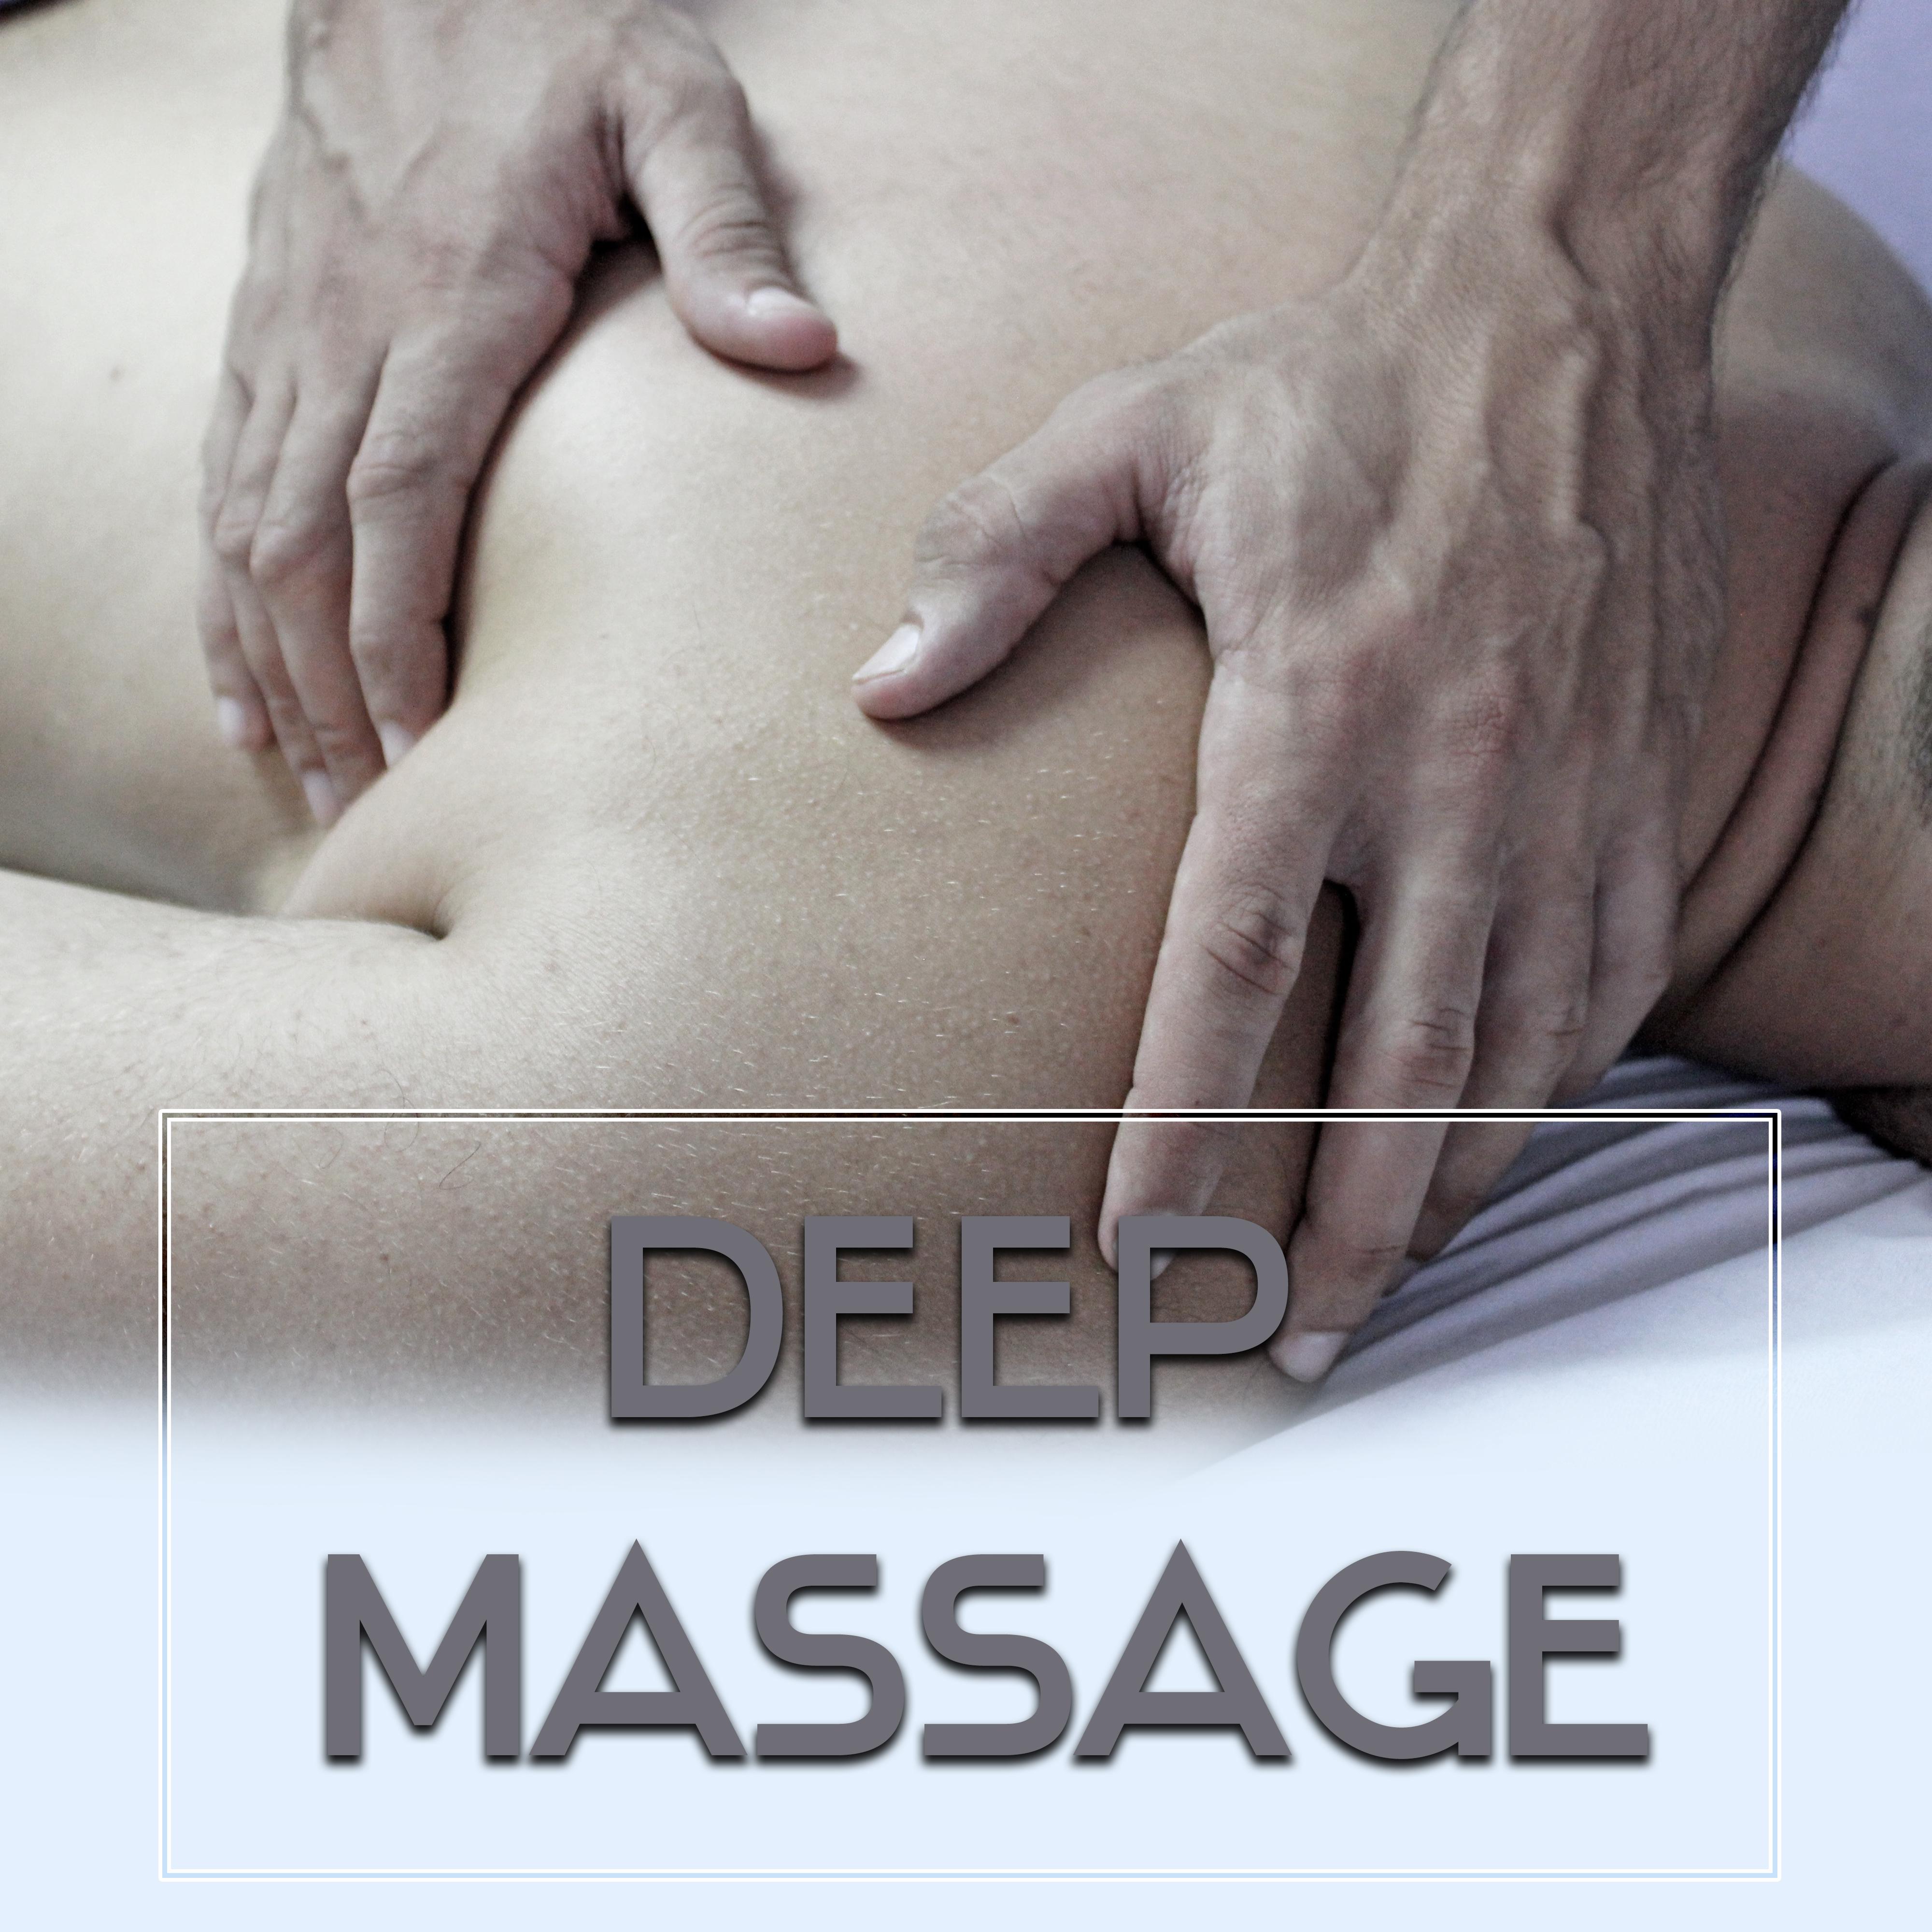 Deep Massage  Relaxation Music for Spa, Wellness, Deep Sleep, Calmness  Harmony, Asian Zen Spa, Peaceful Mind, Nature Sounds